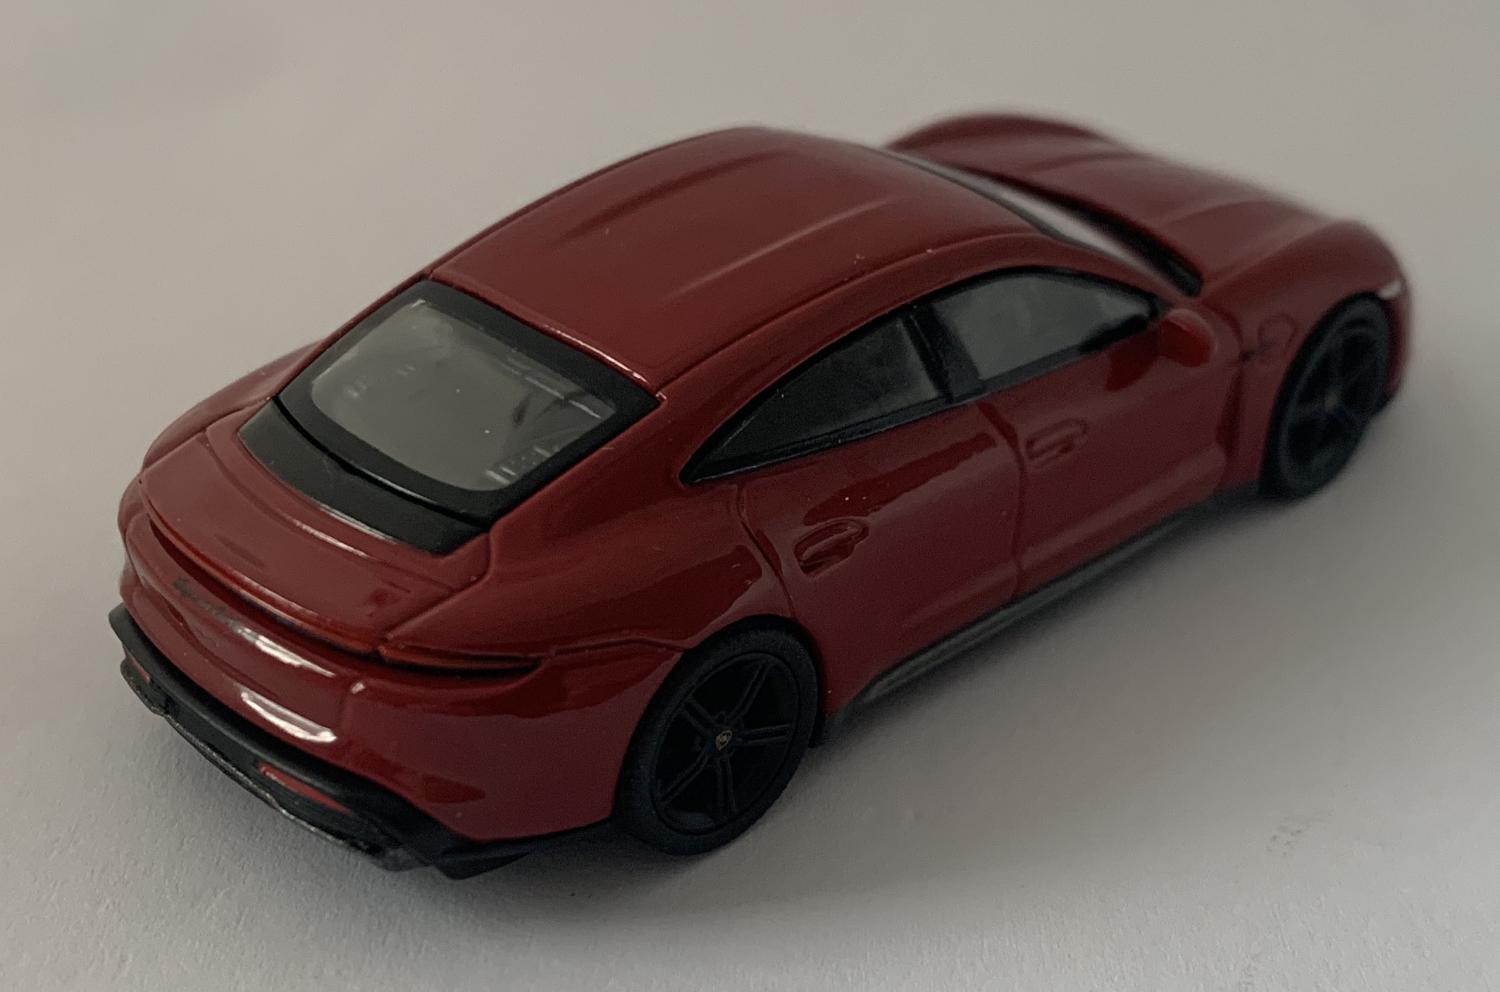 Porsche Taycan Turbo S in Carmine Red 1:64 scale model from Mini GT